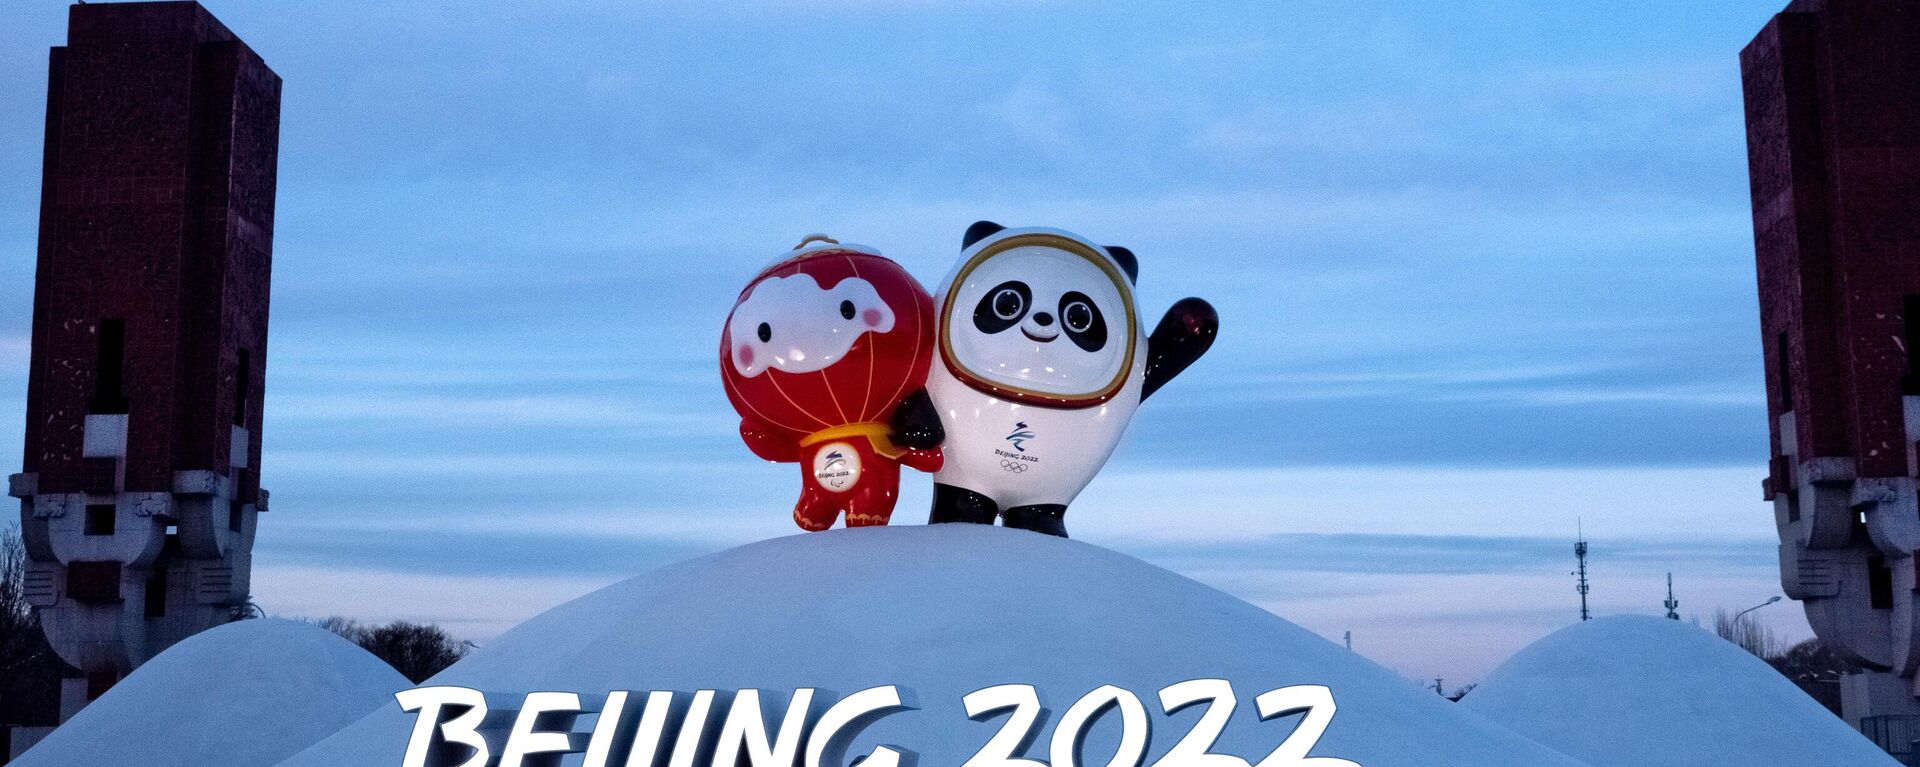 Подготовка Пекина к Олимпиаде - 2022 - Sputnik Молдова, 1920, 01.02.2022